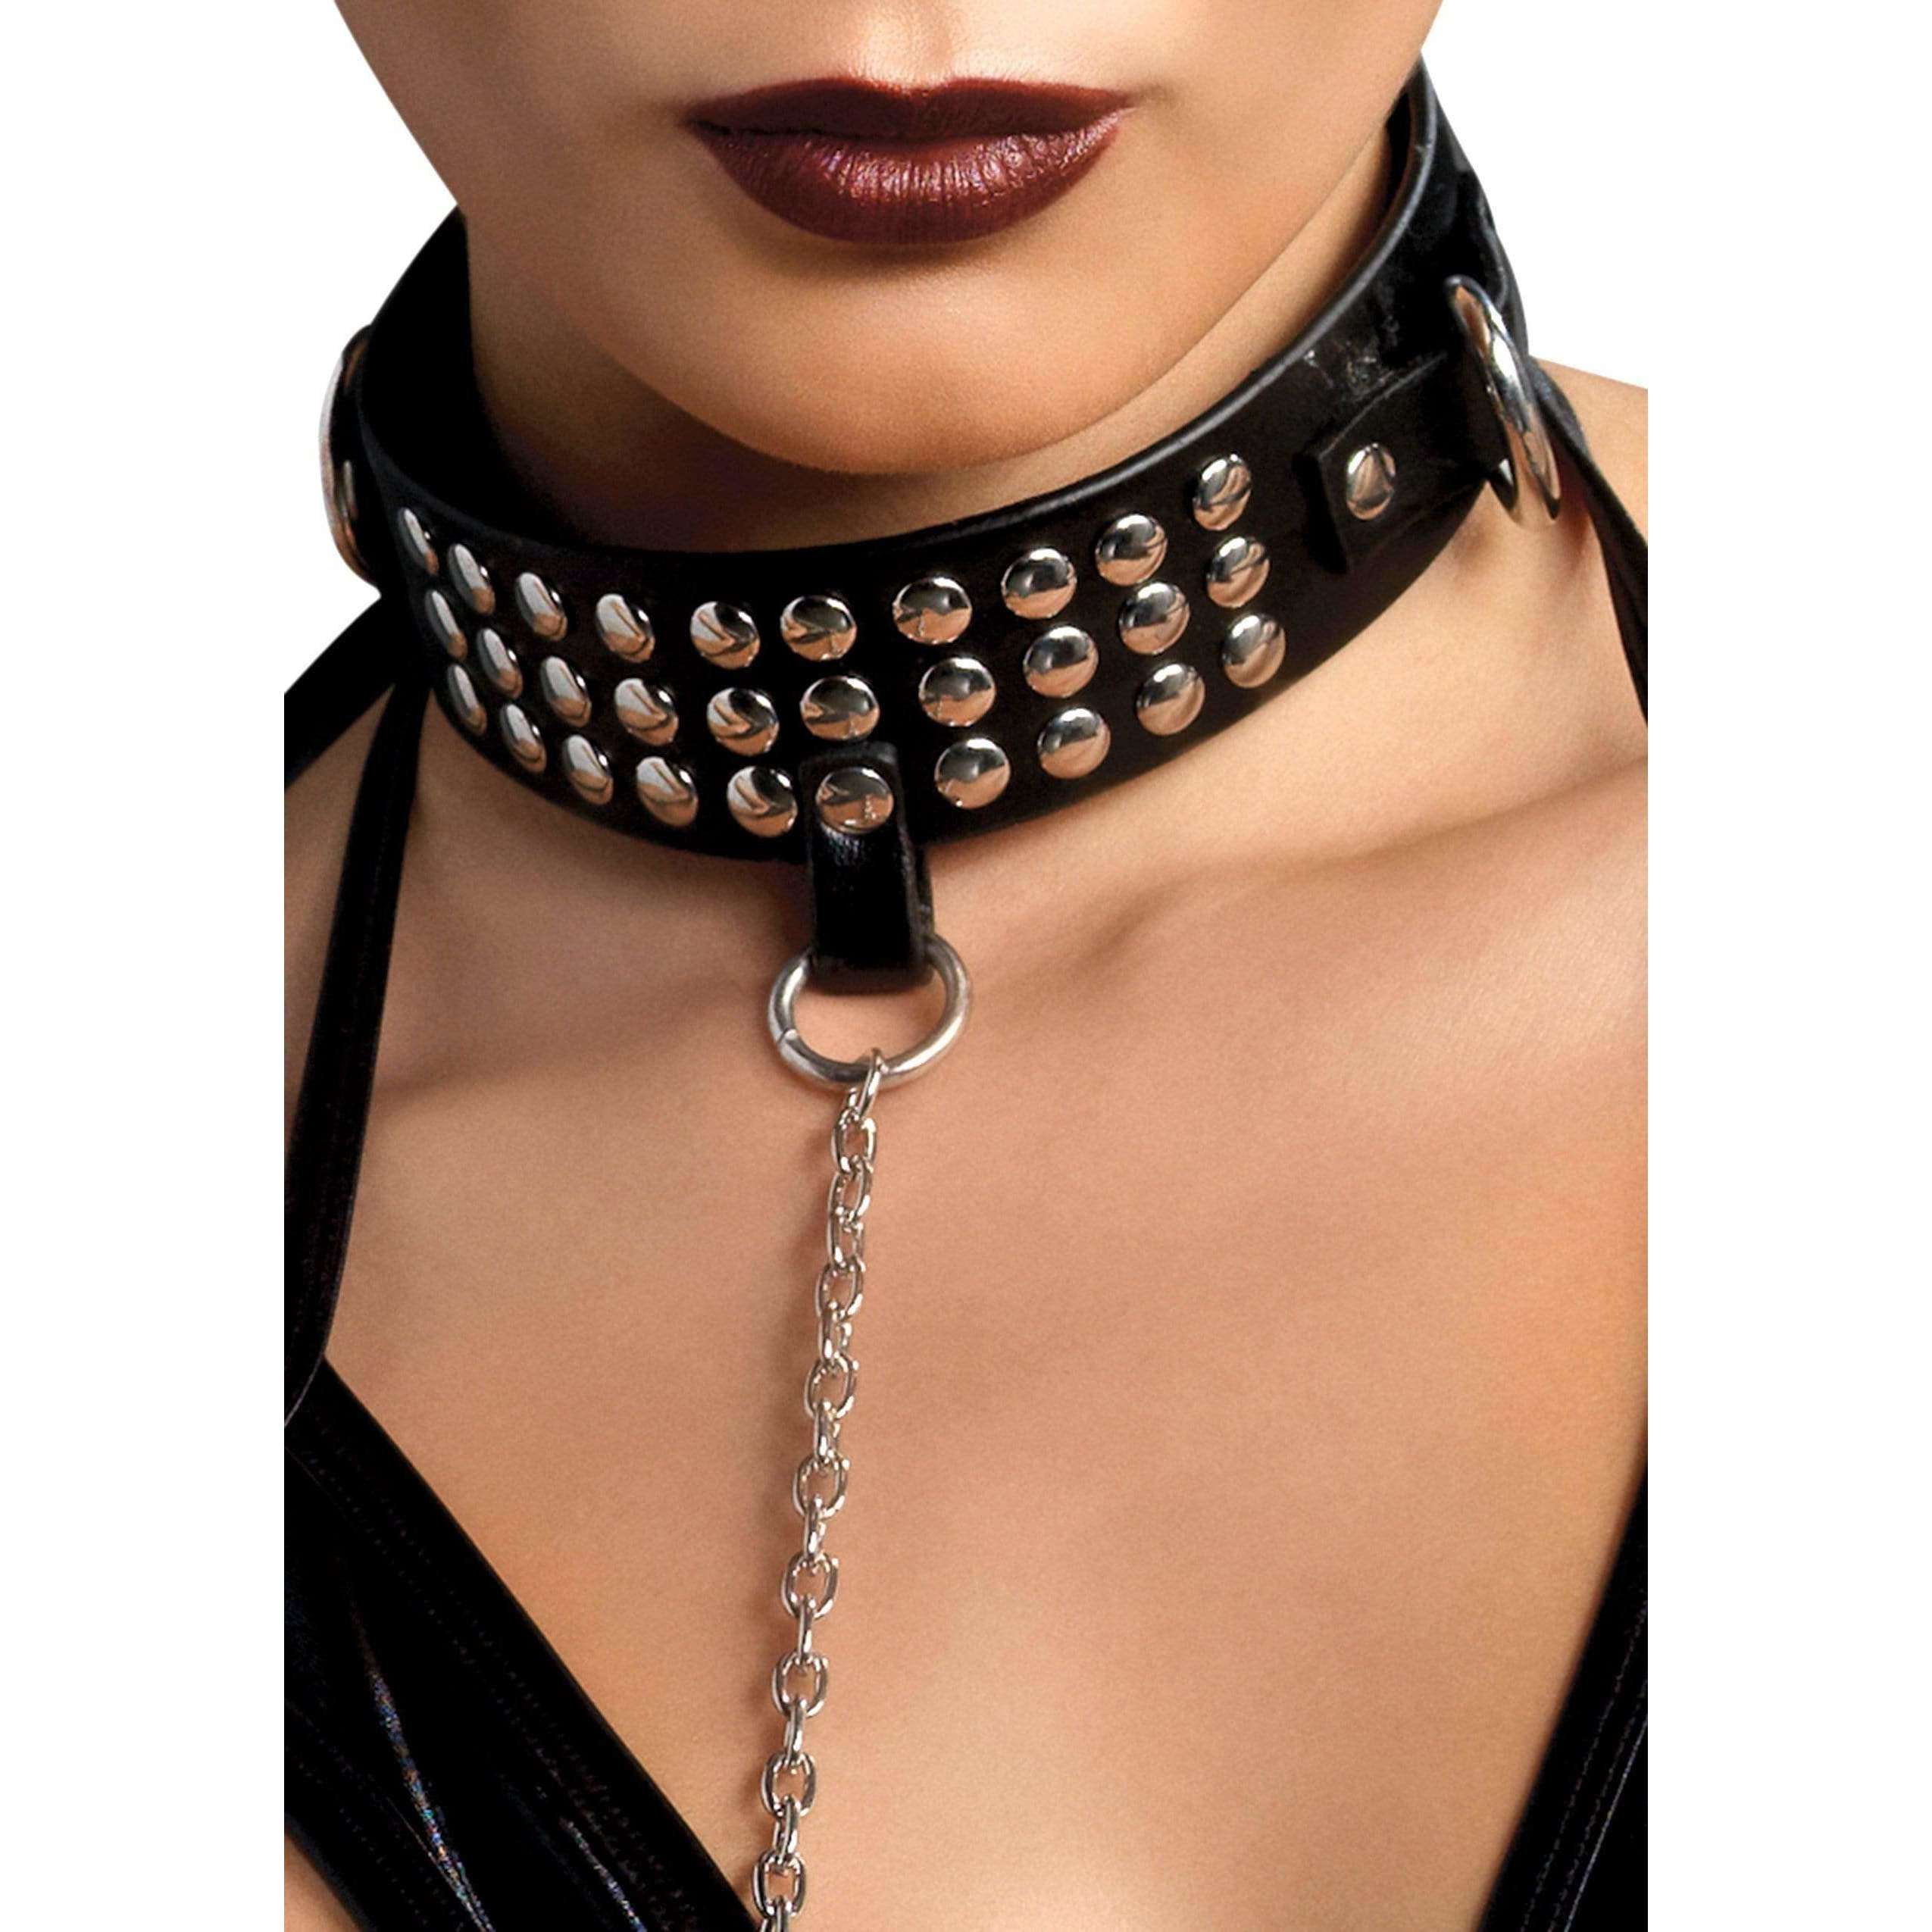 Romean Black Collar & Leash